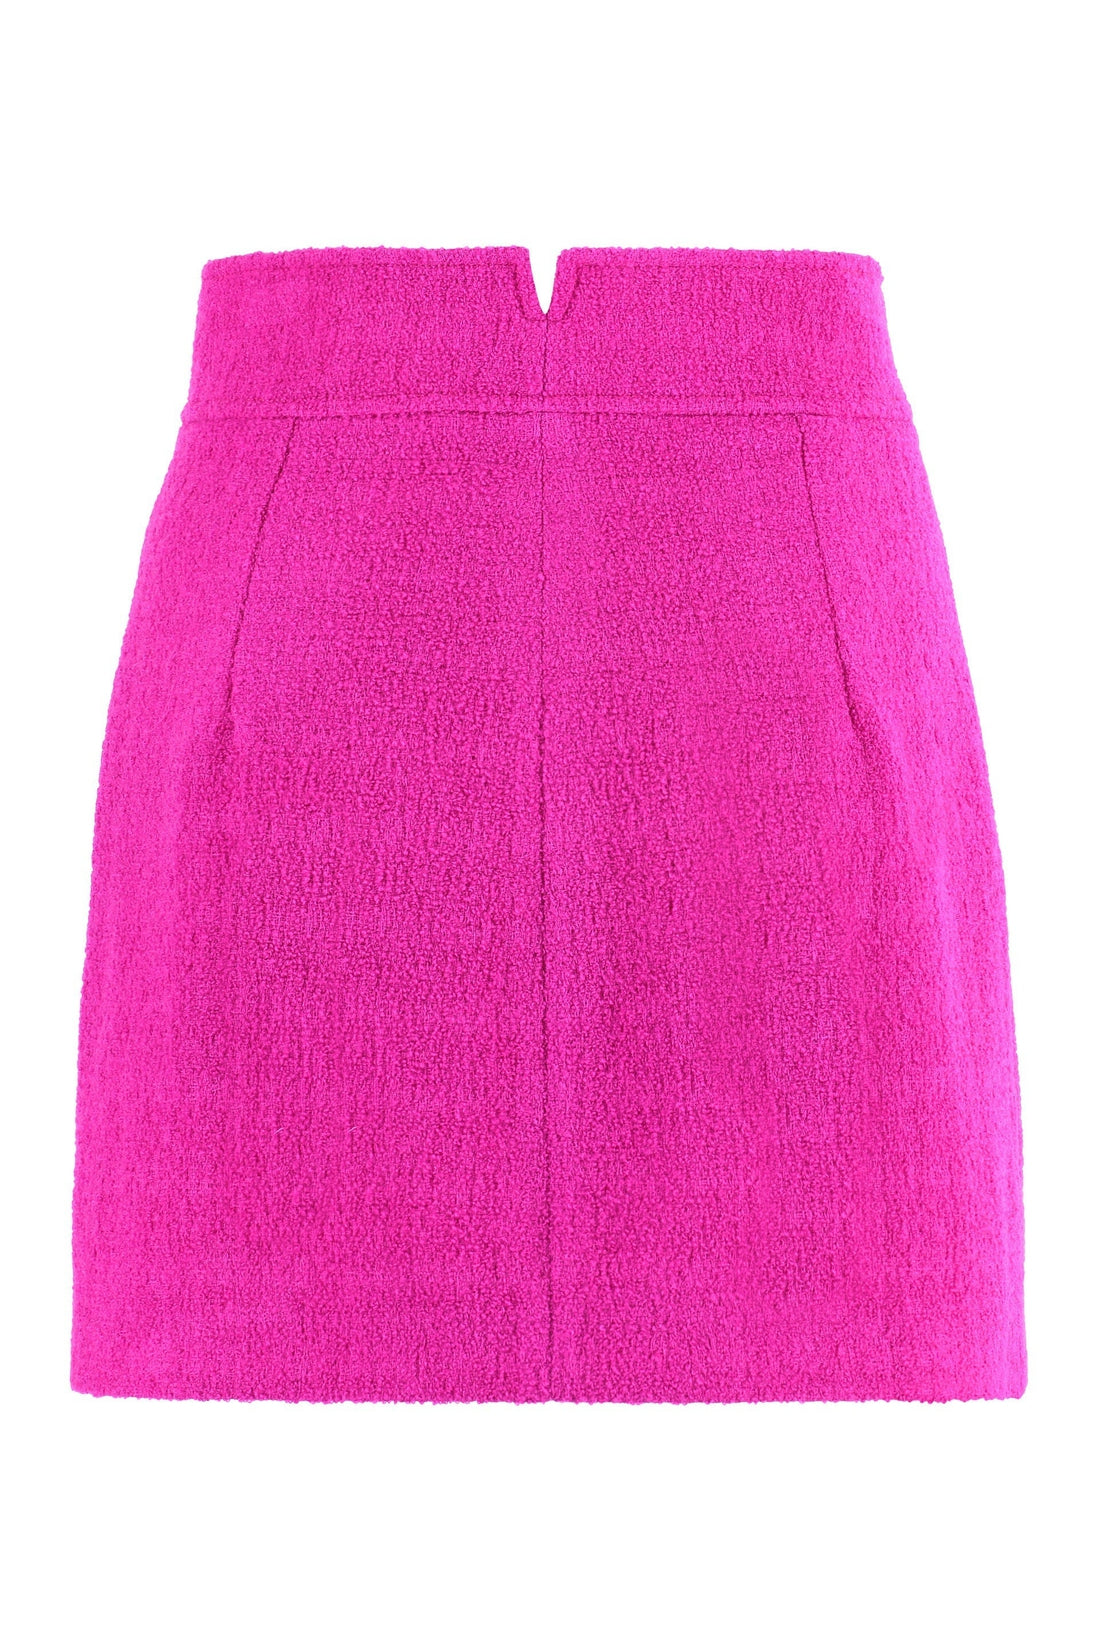 0205 Tagliatore-OUTLET-SALE-Flower tweed mini-skirt-ARCHIVIST